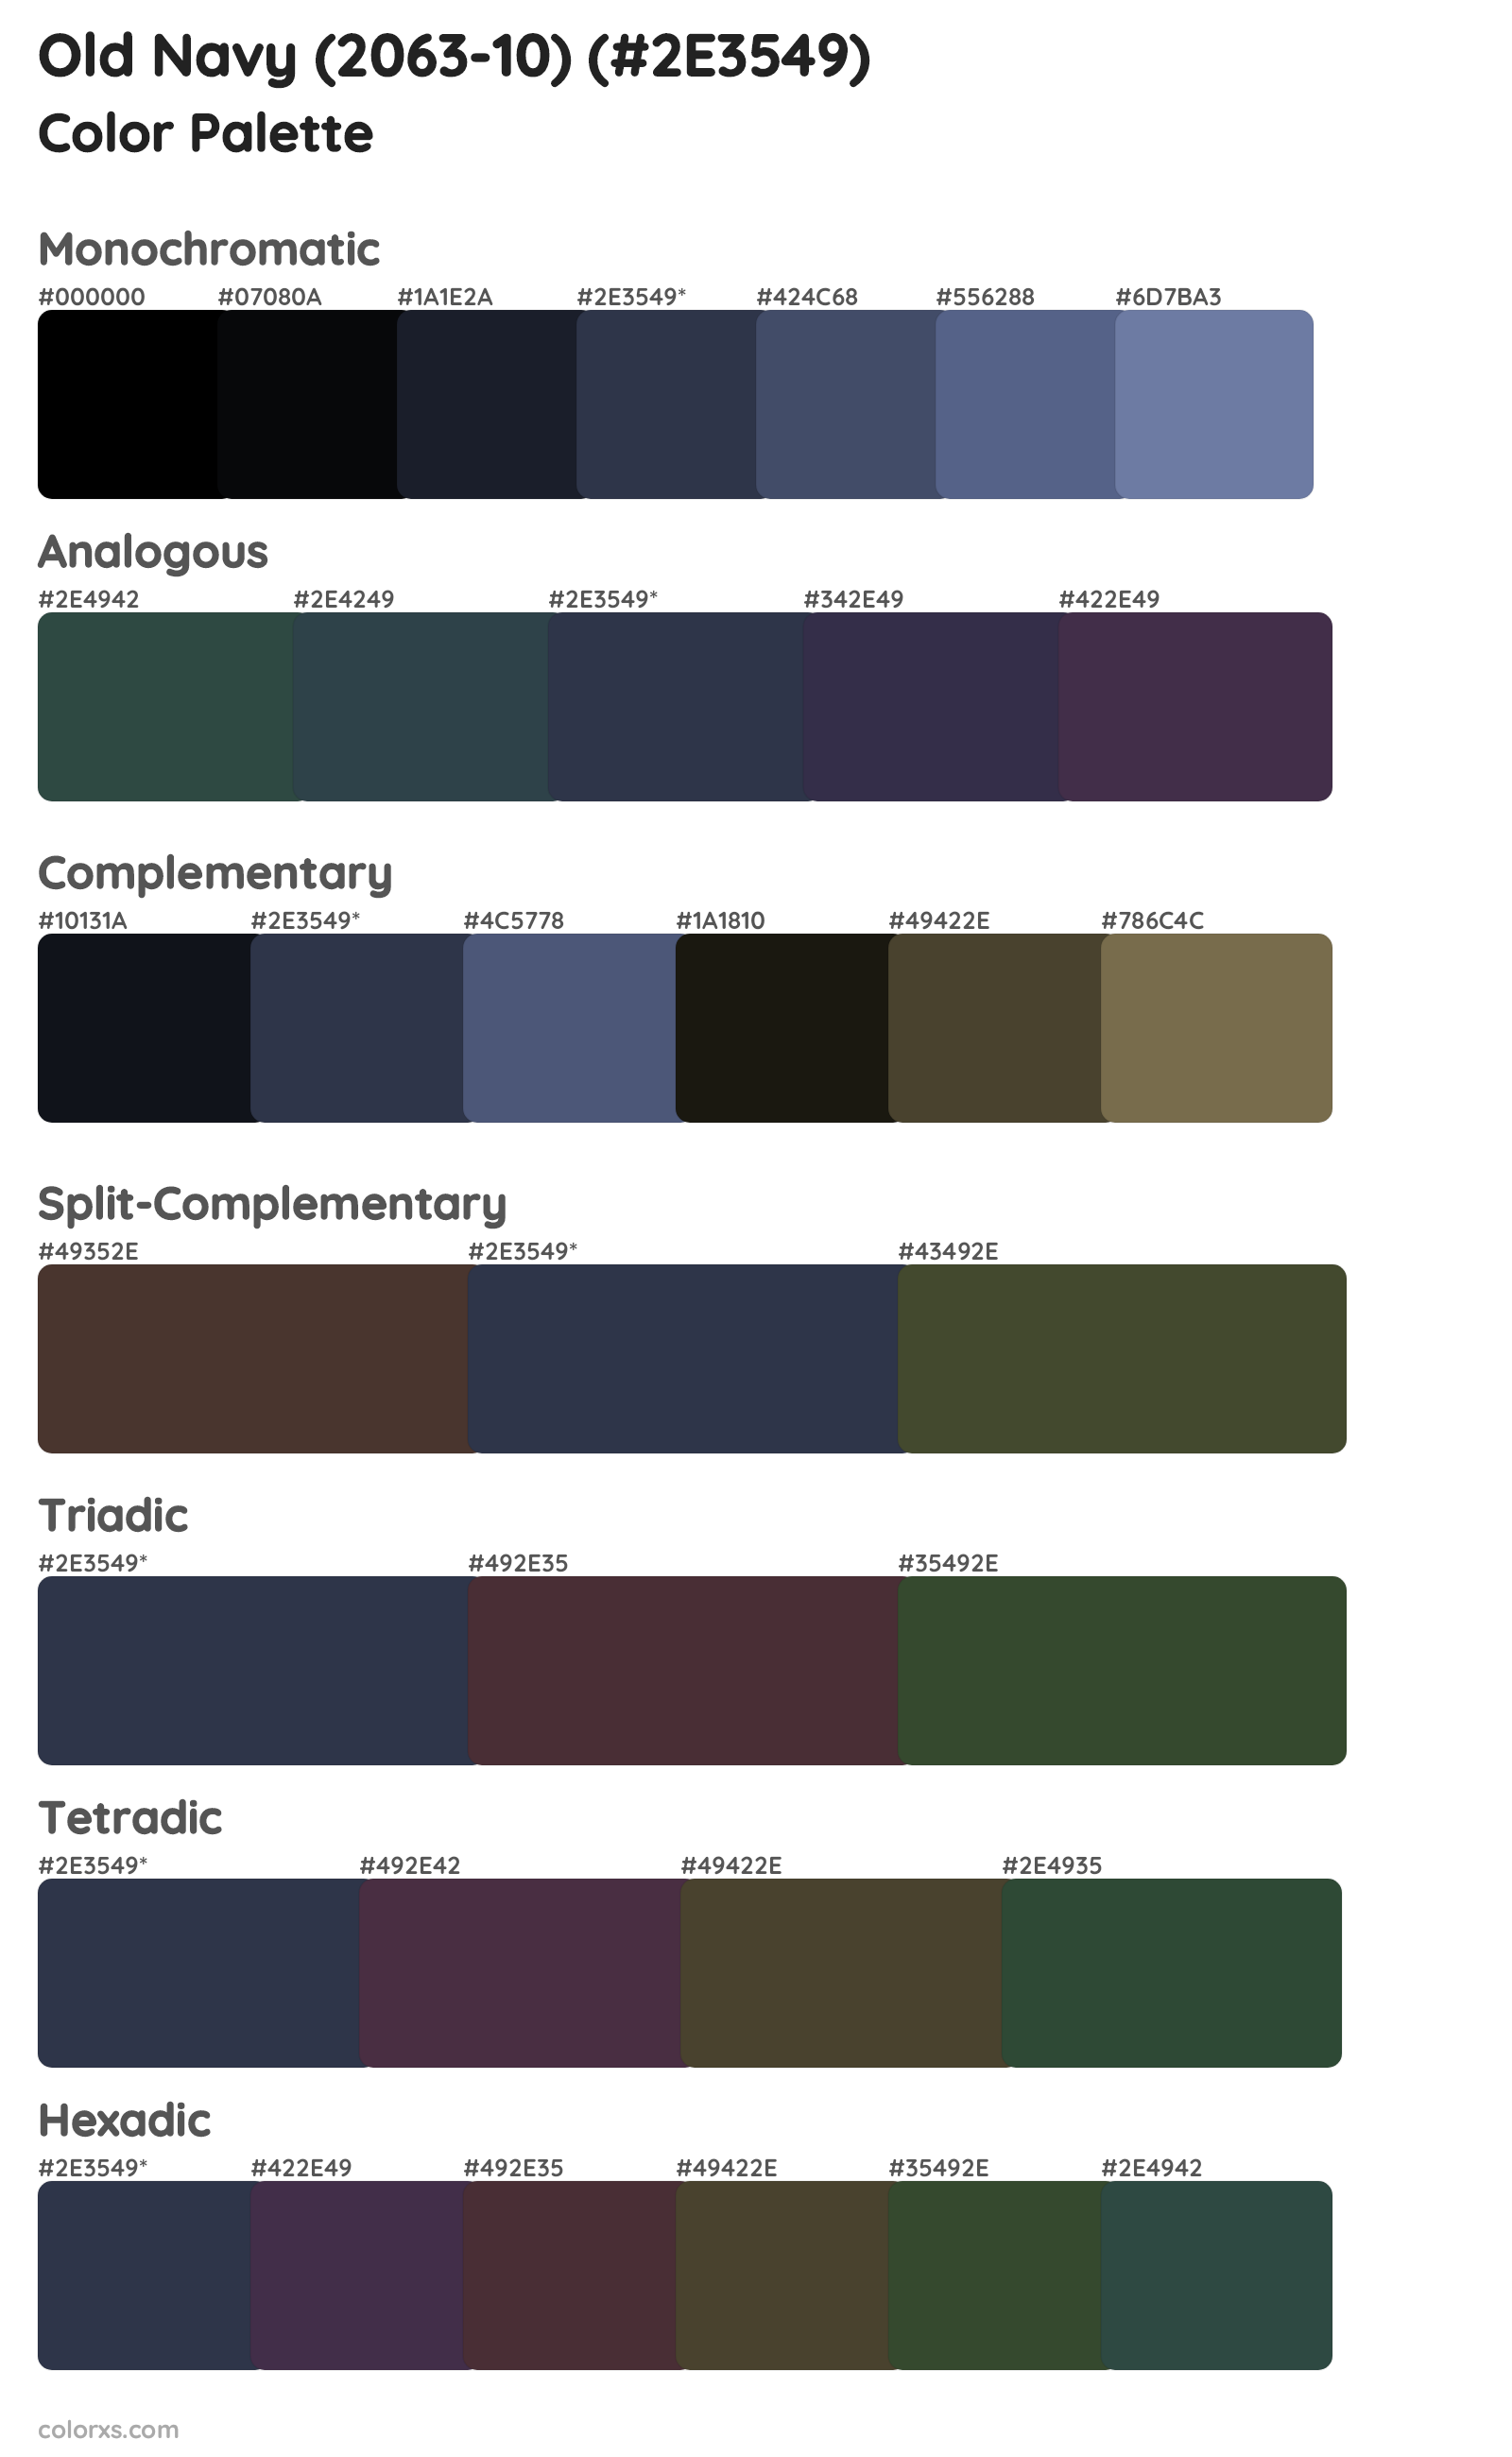 Old Navy (2063-10) Color Scheme Palettes